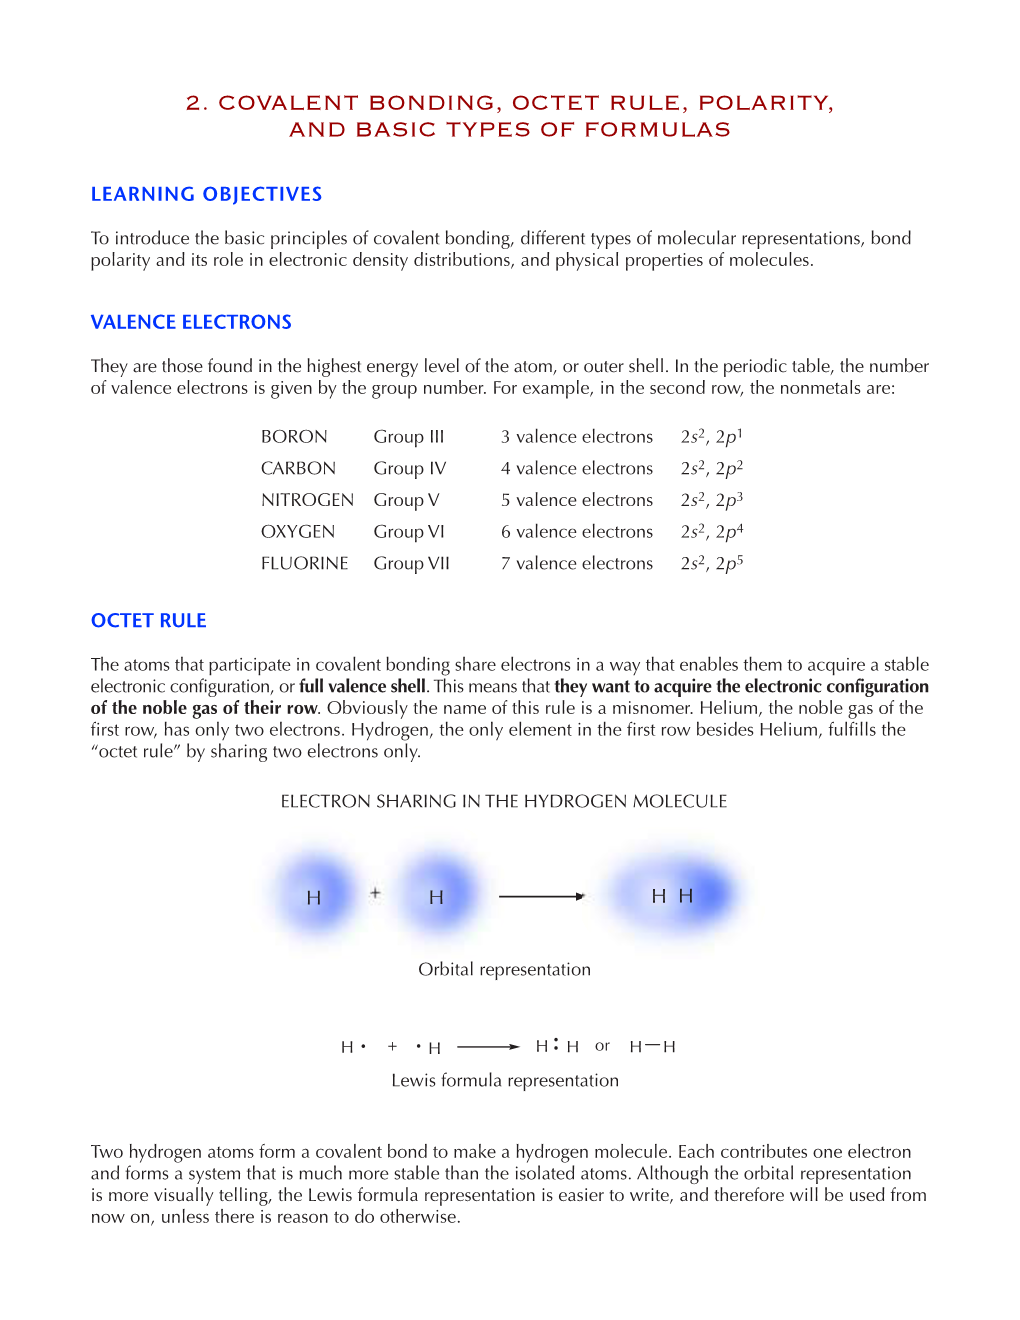 2. Covalent Bonding, Octet Rule, Polarity, and Basic Types of Formulas